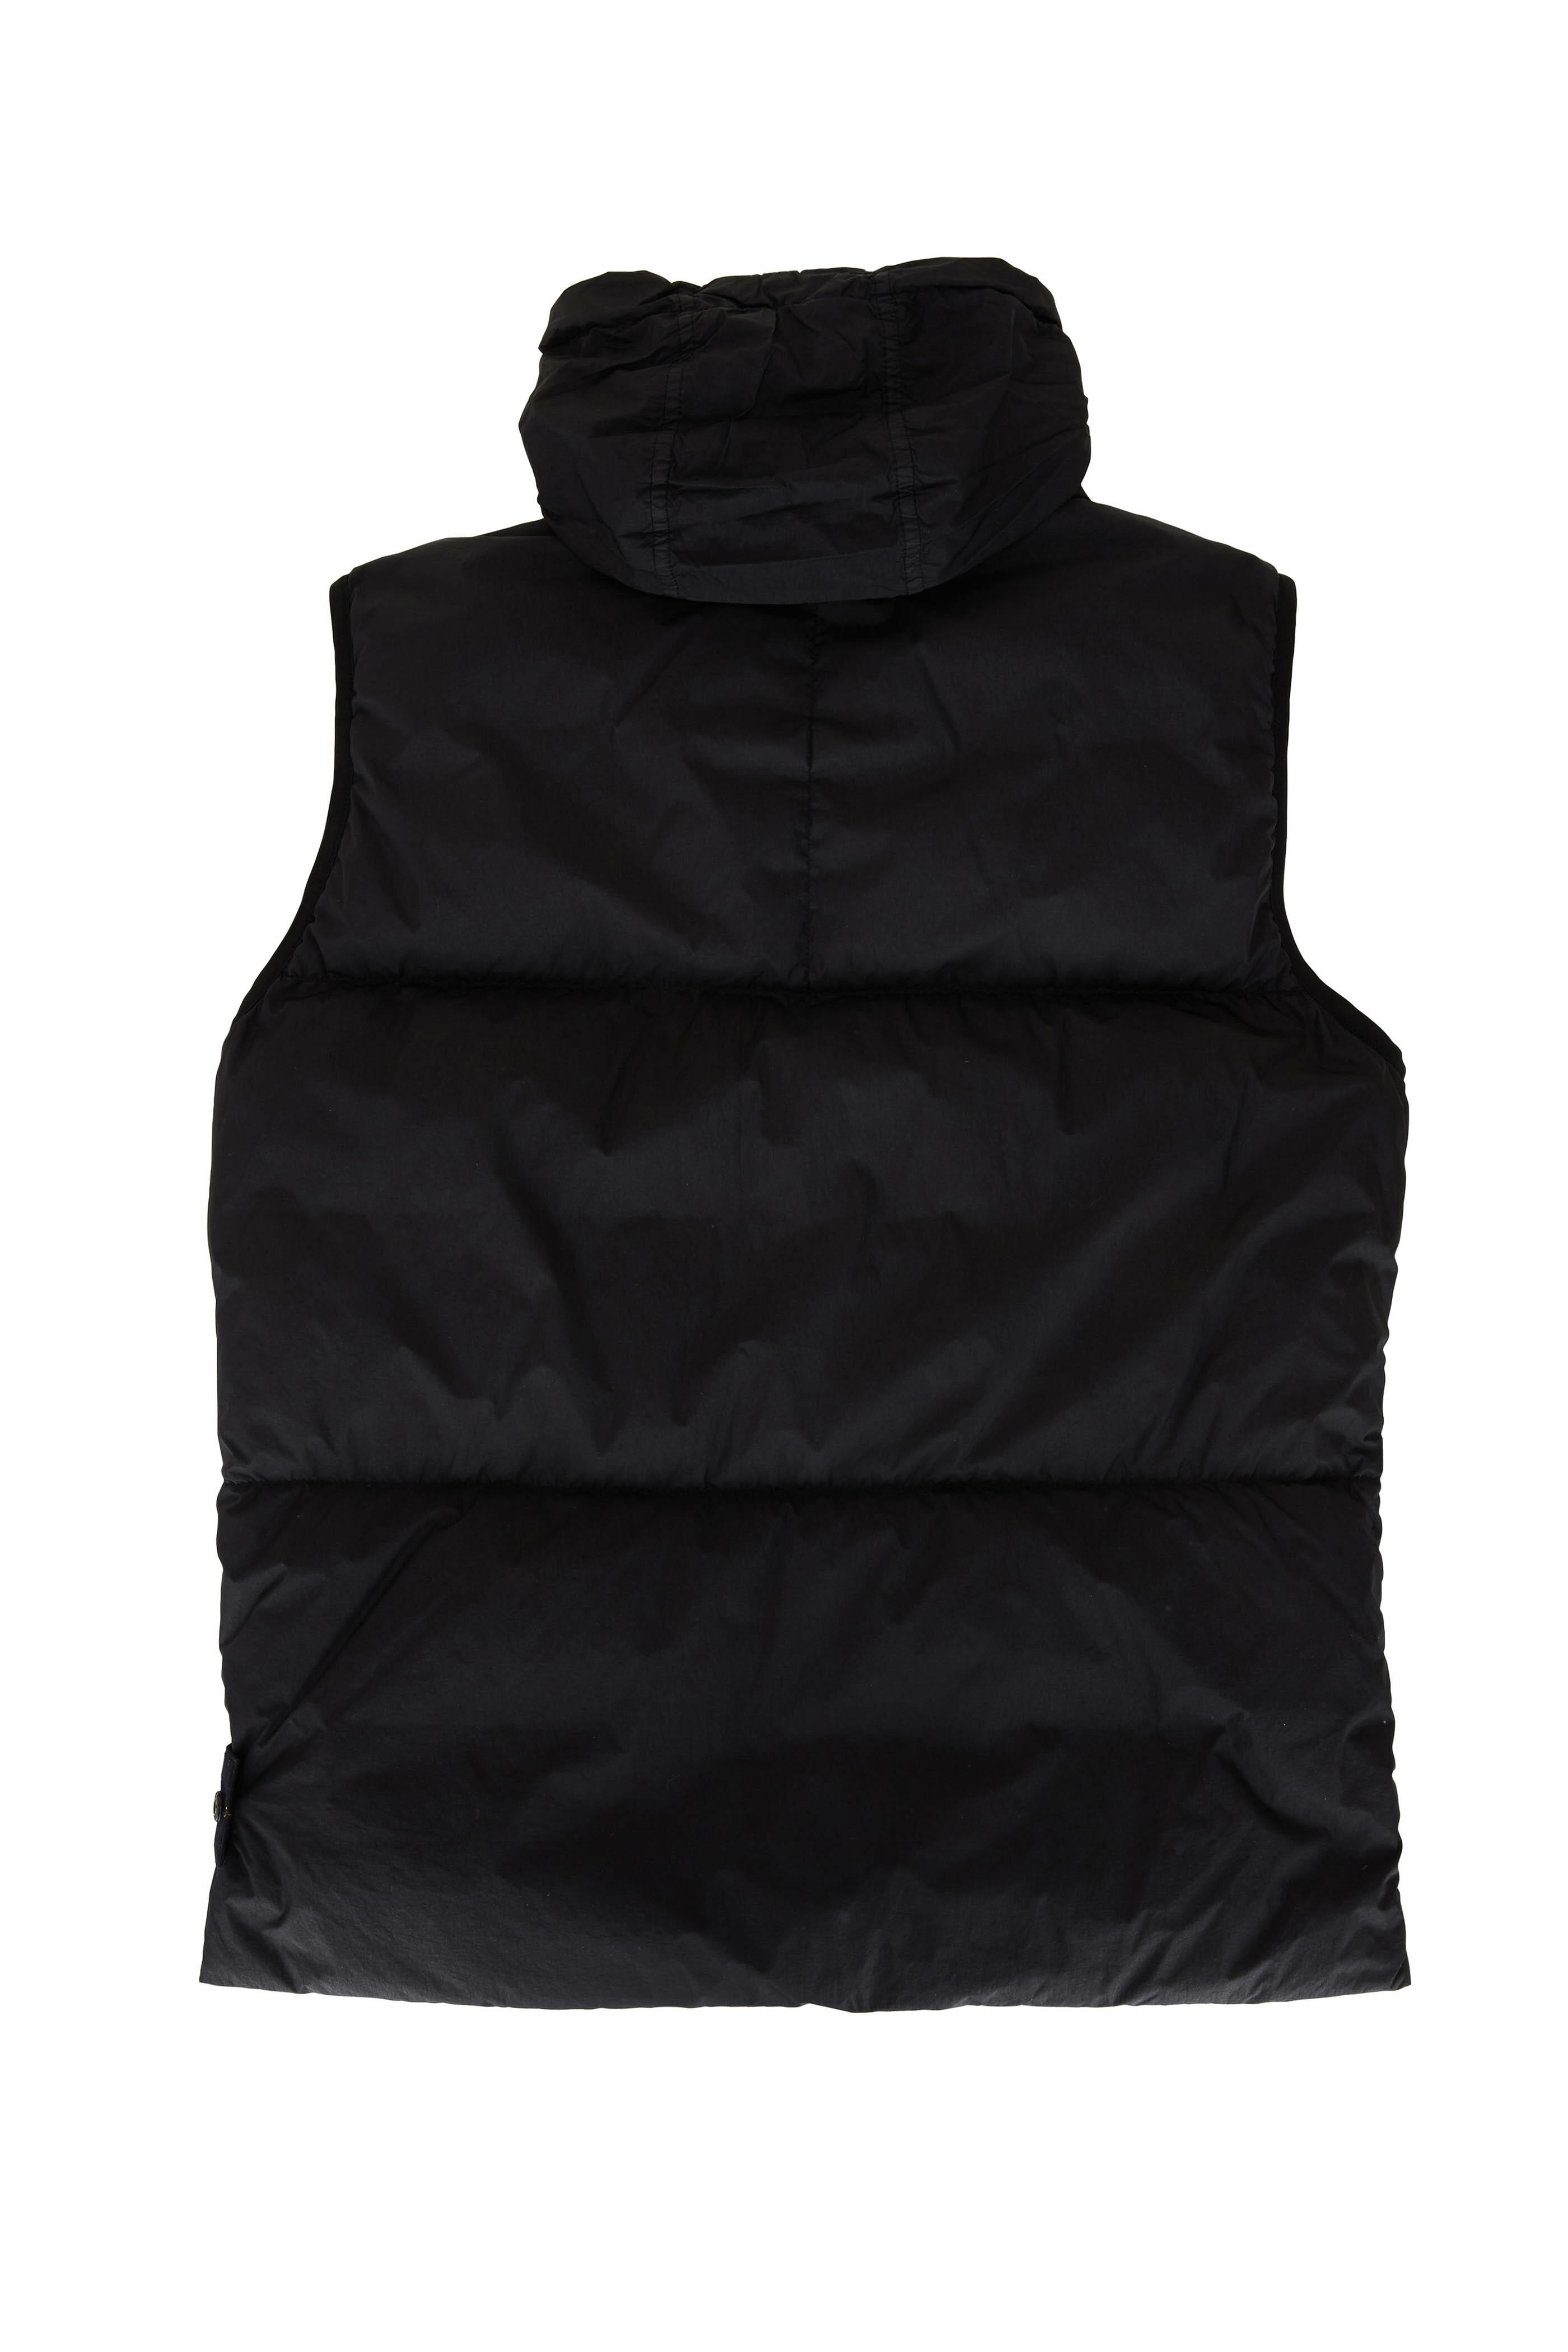 Stone Island - Black Garment Dyed Down Puffer Vest